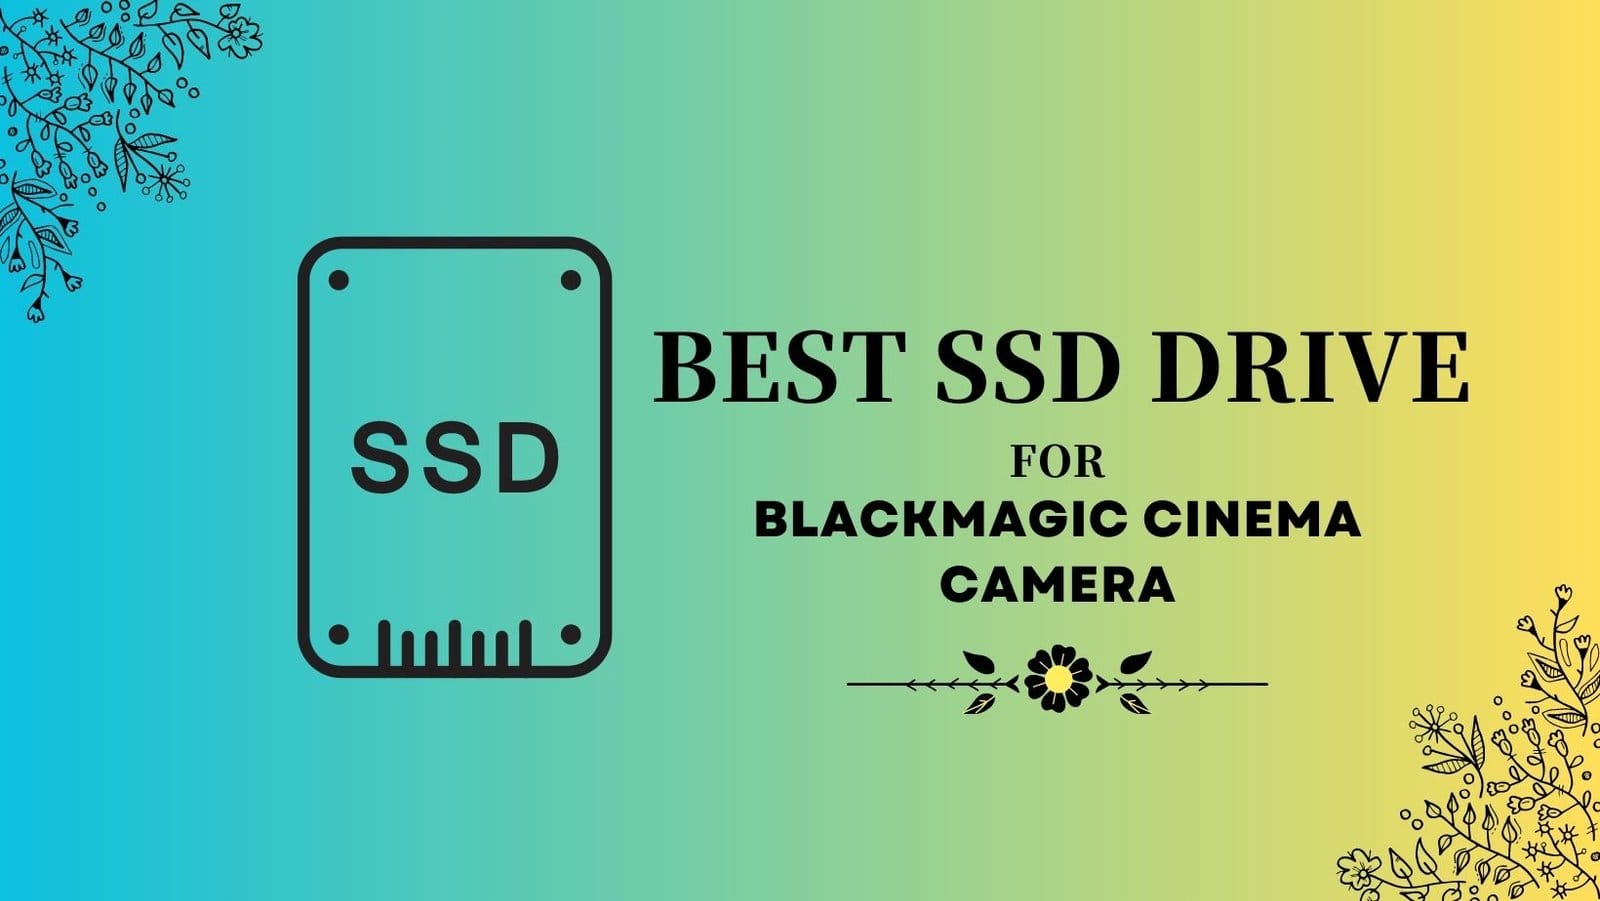 "Best SSD for Blackmagic Cinema Camera"